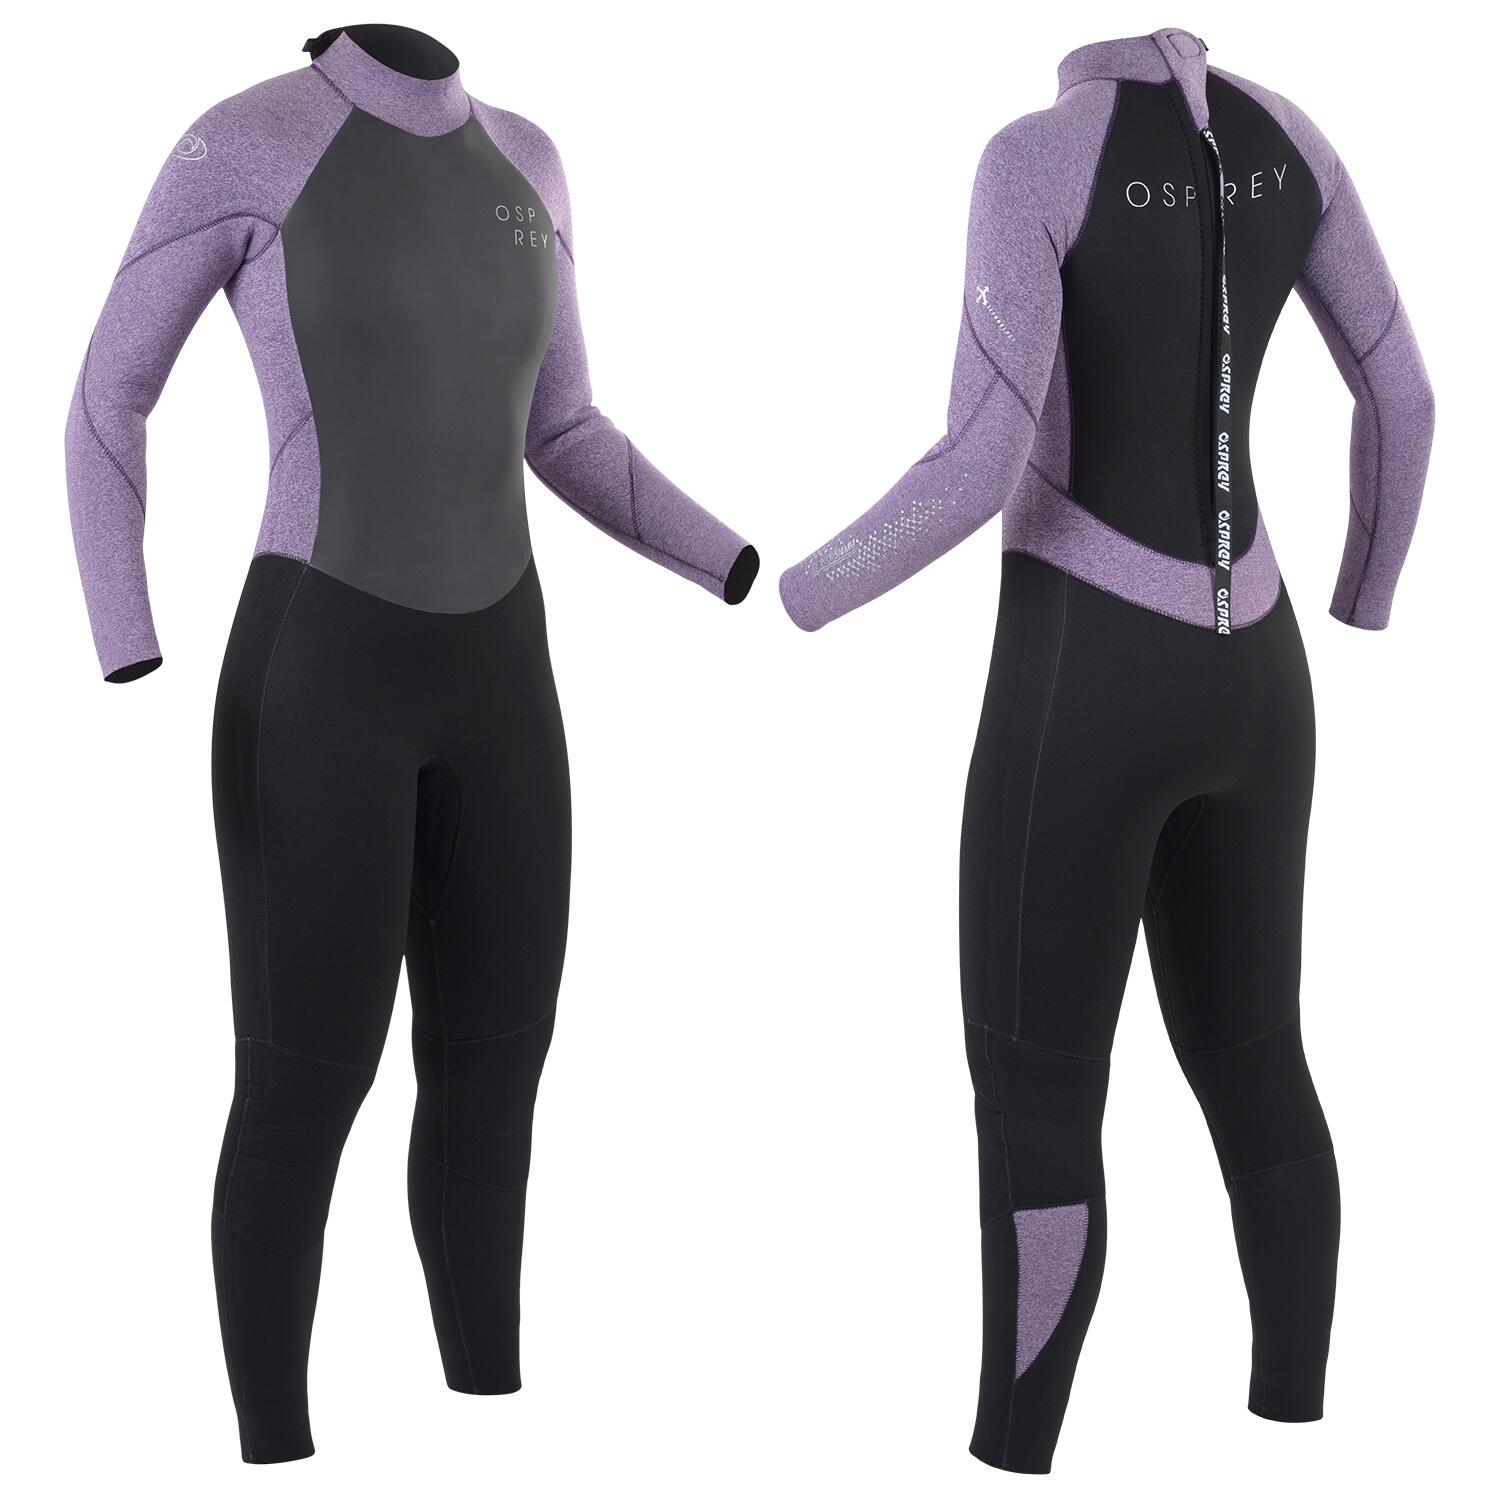 OSPREY ACTION SPORTS Osprey Womens Zero 5mm Wetsuit | Full Length Neoprene Wetsuit Purple